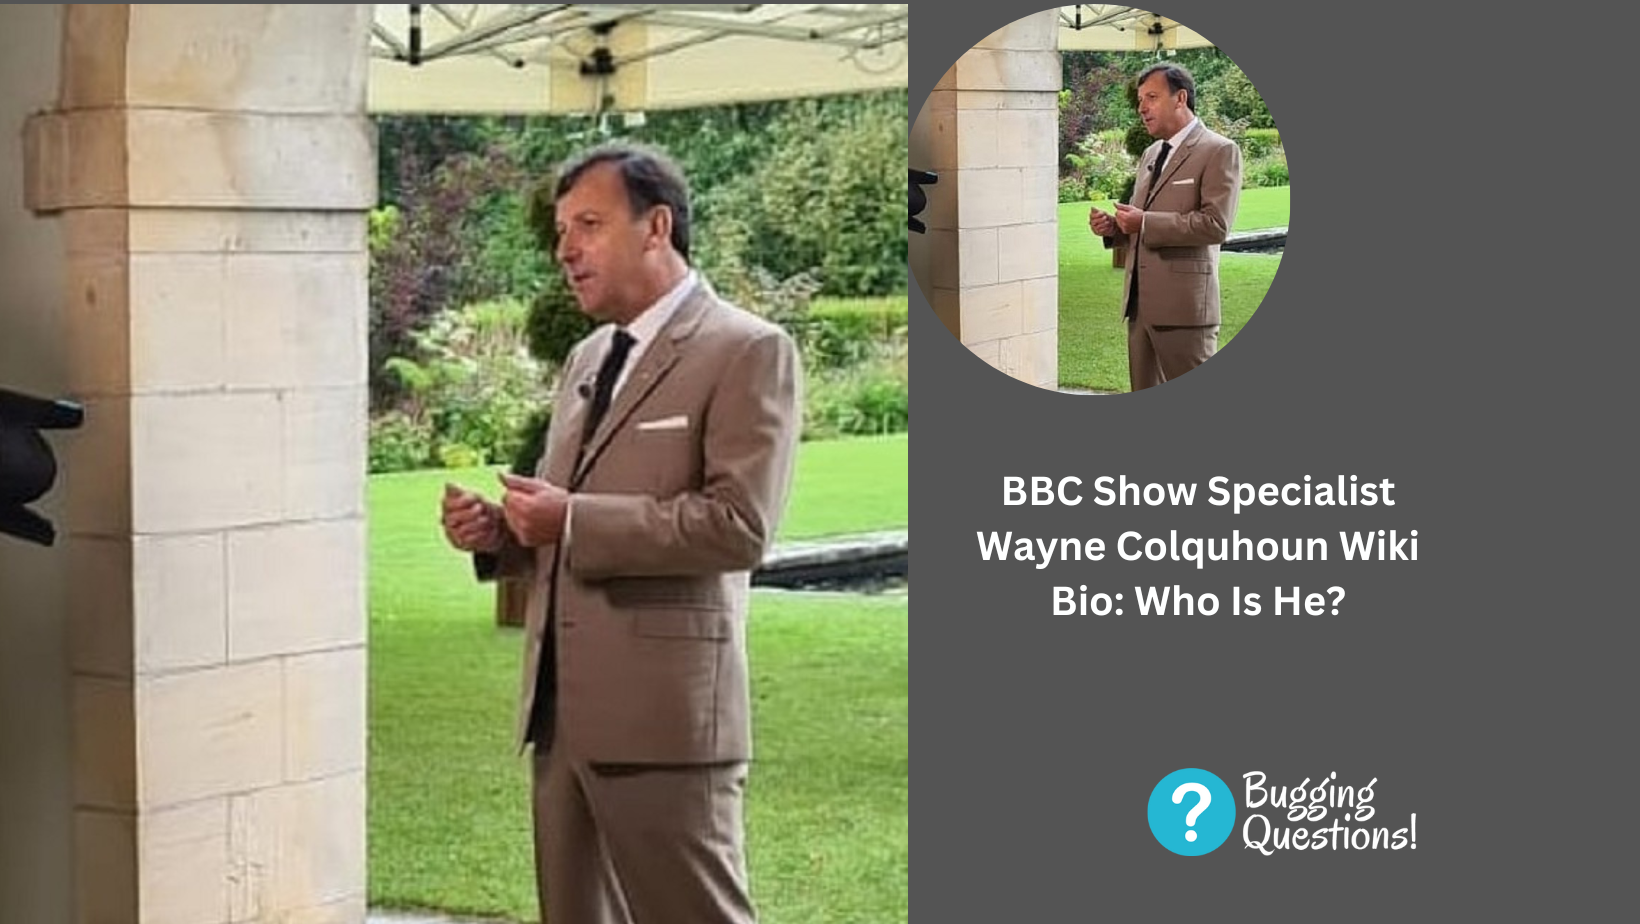 BBC Show Specialist Wayne Colquhoun Wiki Bio: Who Is He?